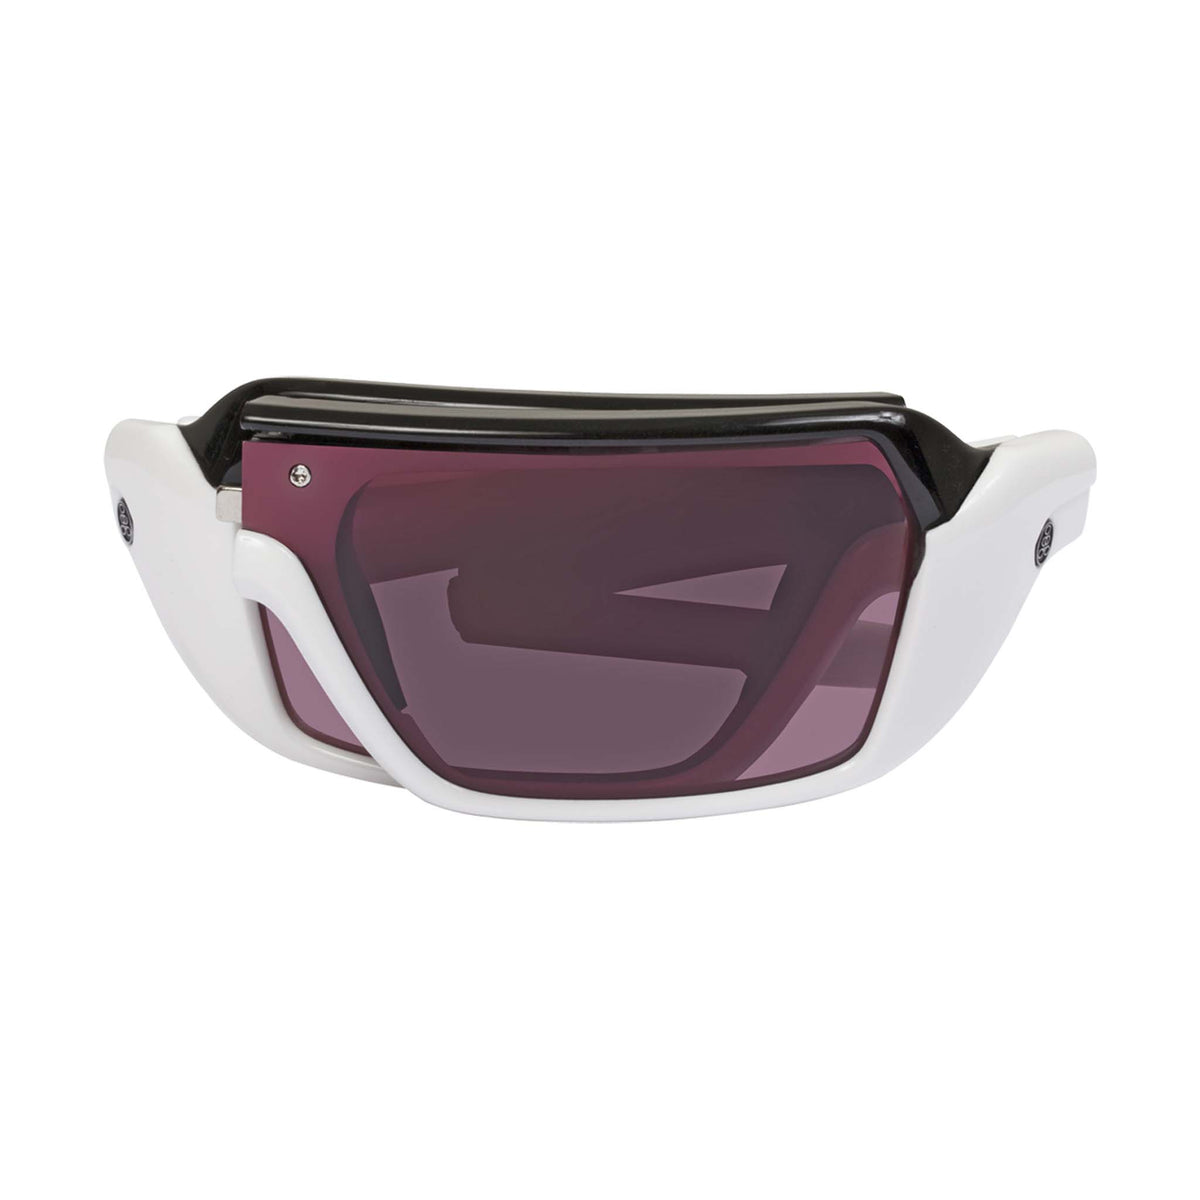 Popticals, Premium Compact Sunglasses, PopStorm, 200060-WBPS, Standard Sunglasses, Gloss Black/White Frame, Purple Golf Lenses, Compact View